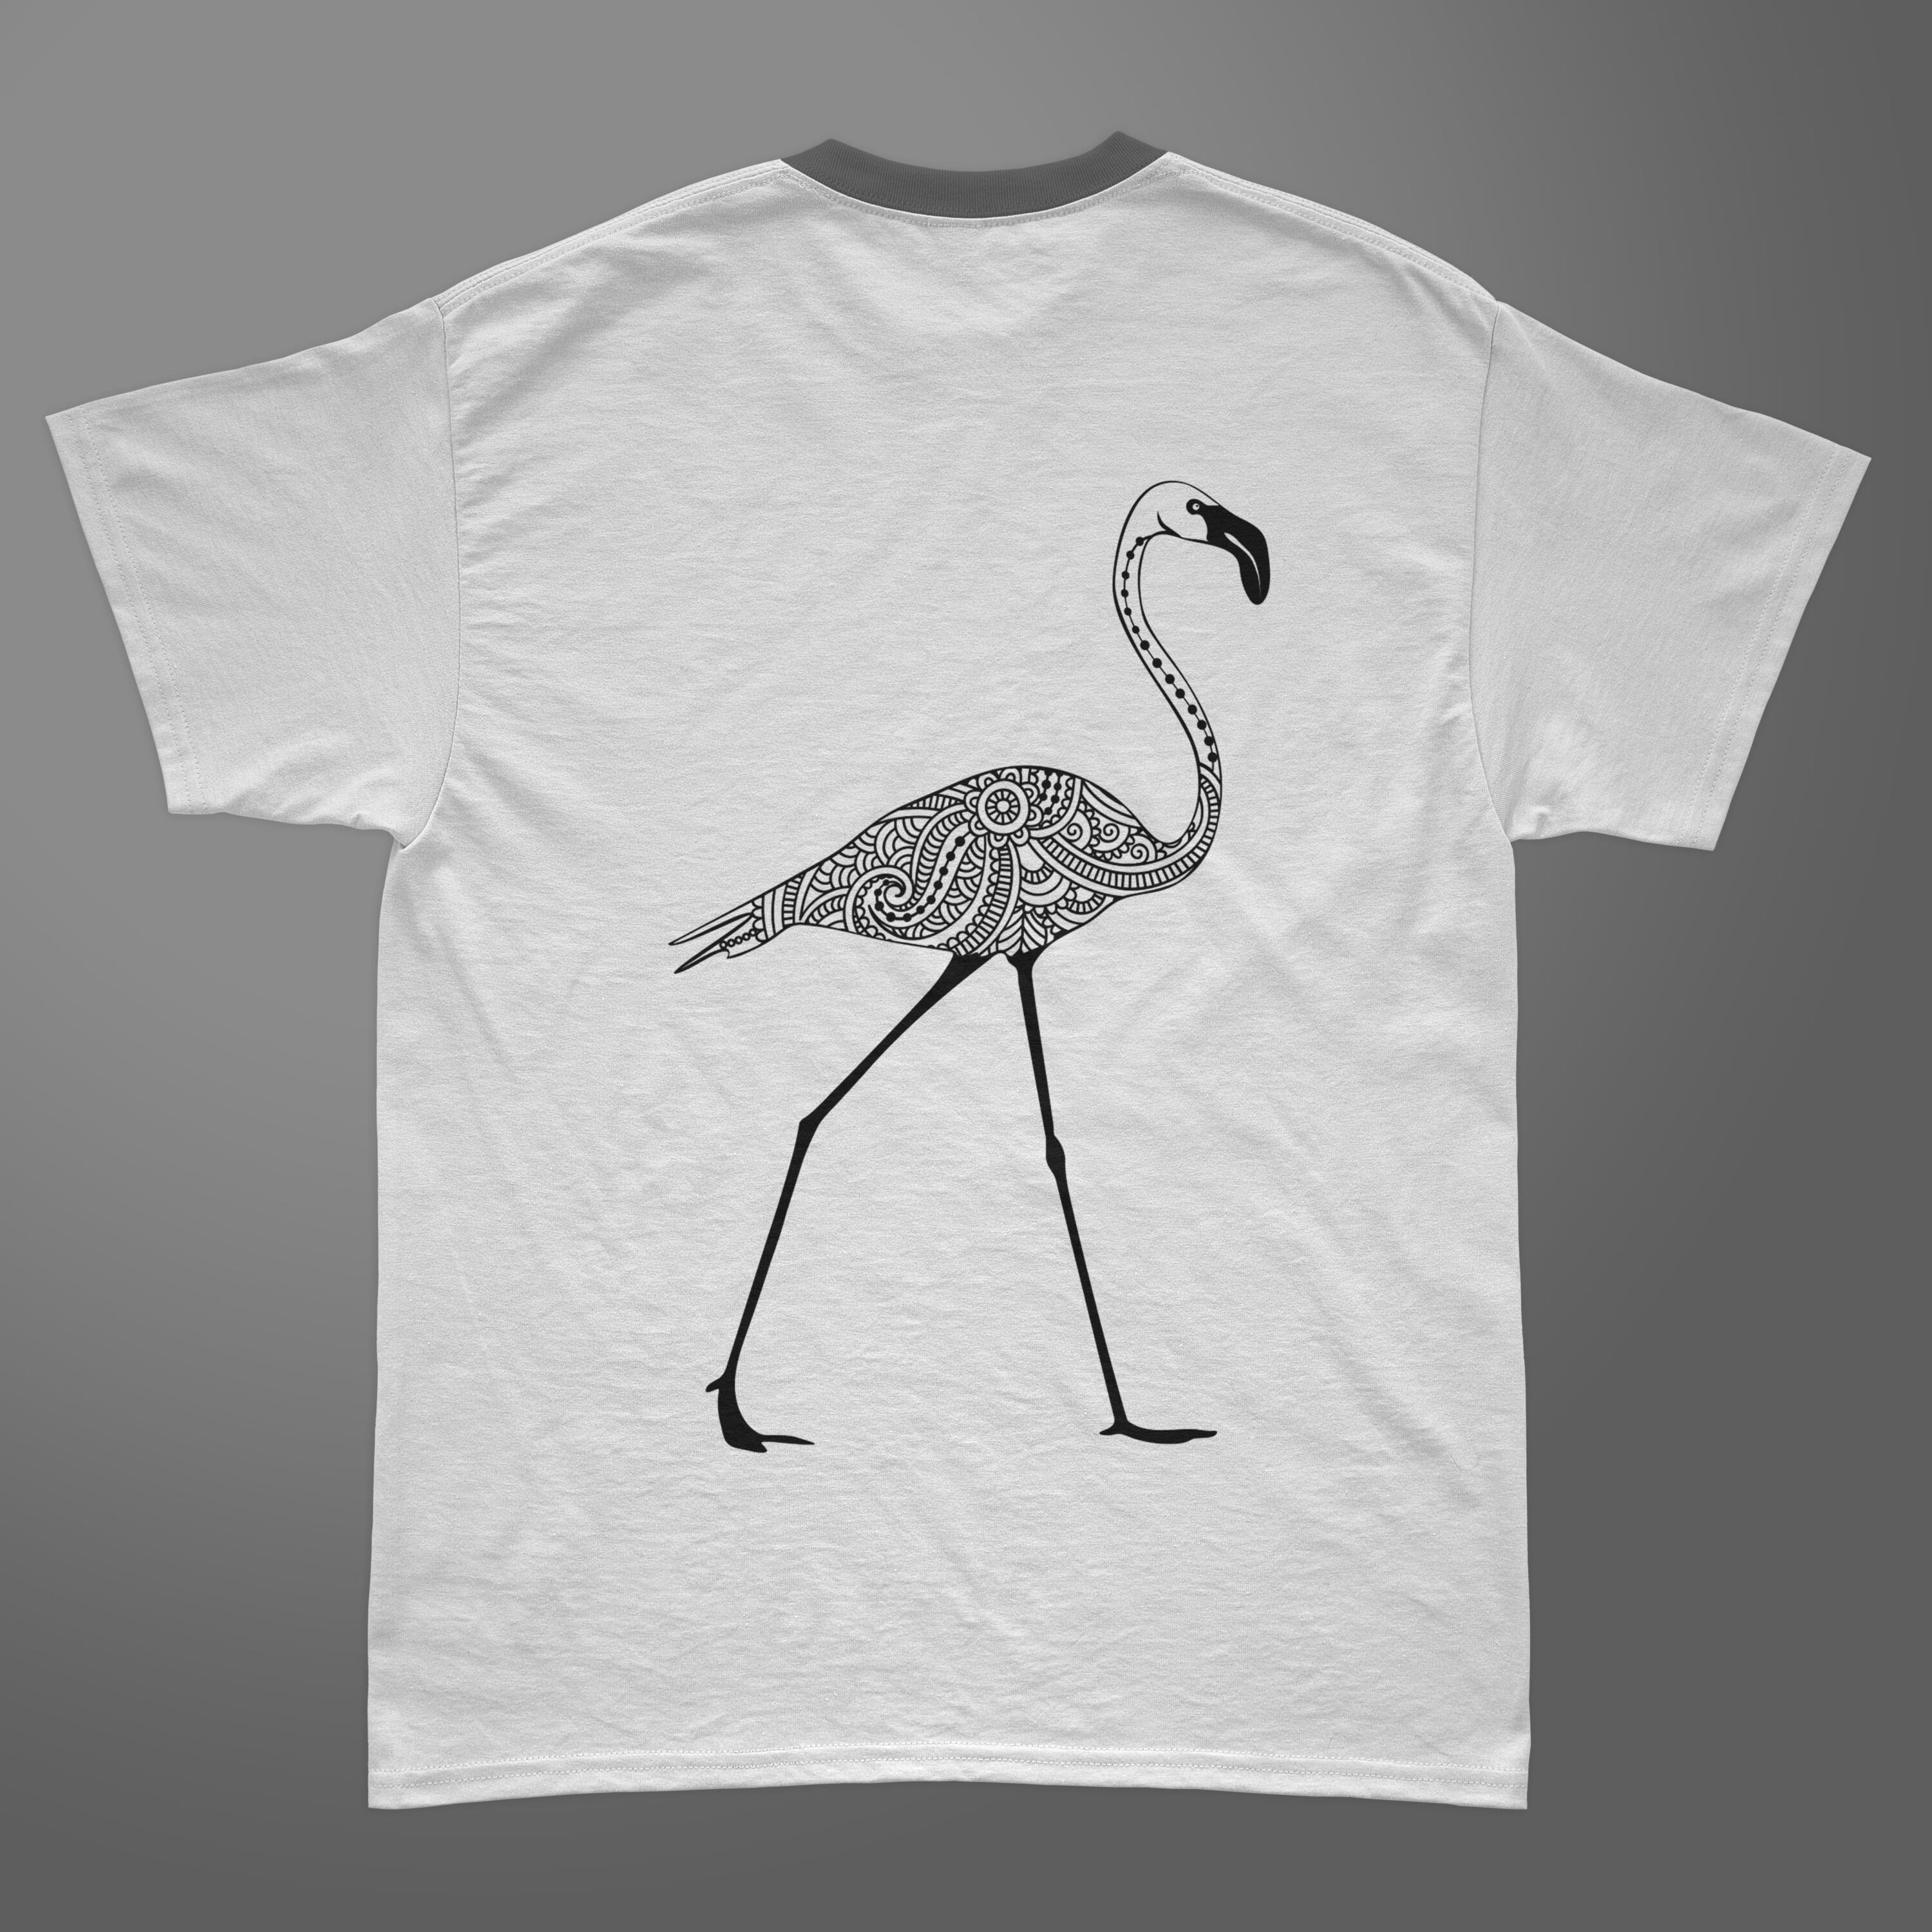 Cool mandala flamingo for your t-shirt.